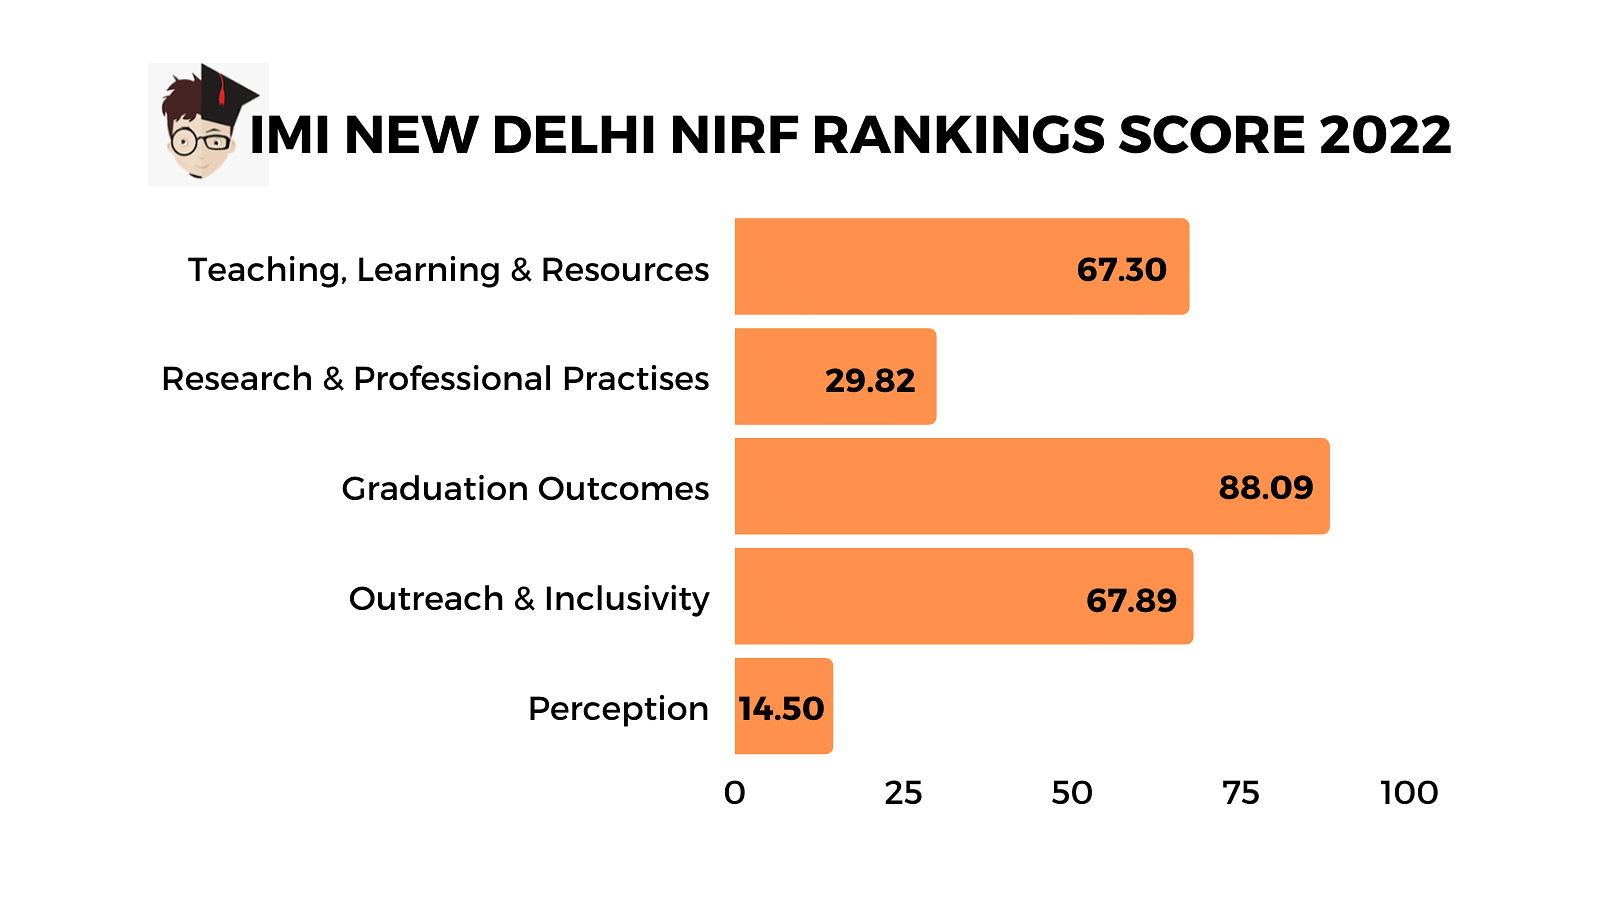 IMI New Delhi NIRF Rankings 2022 Scores